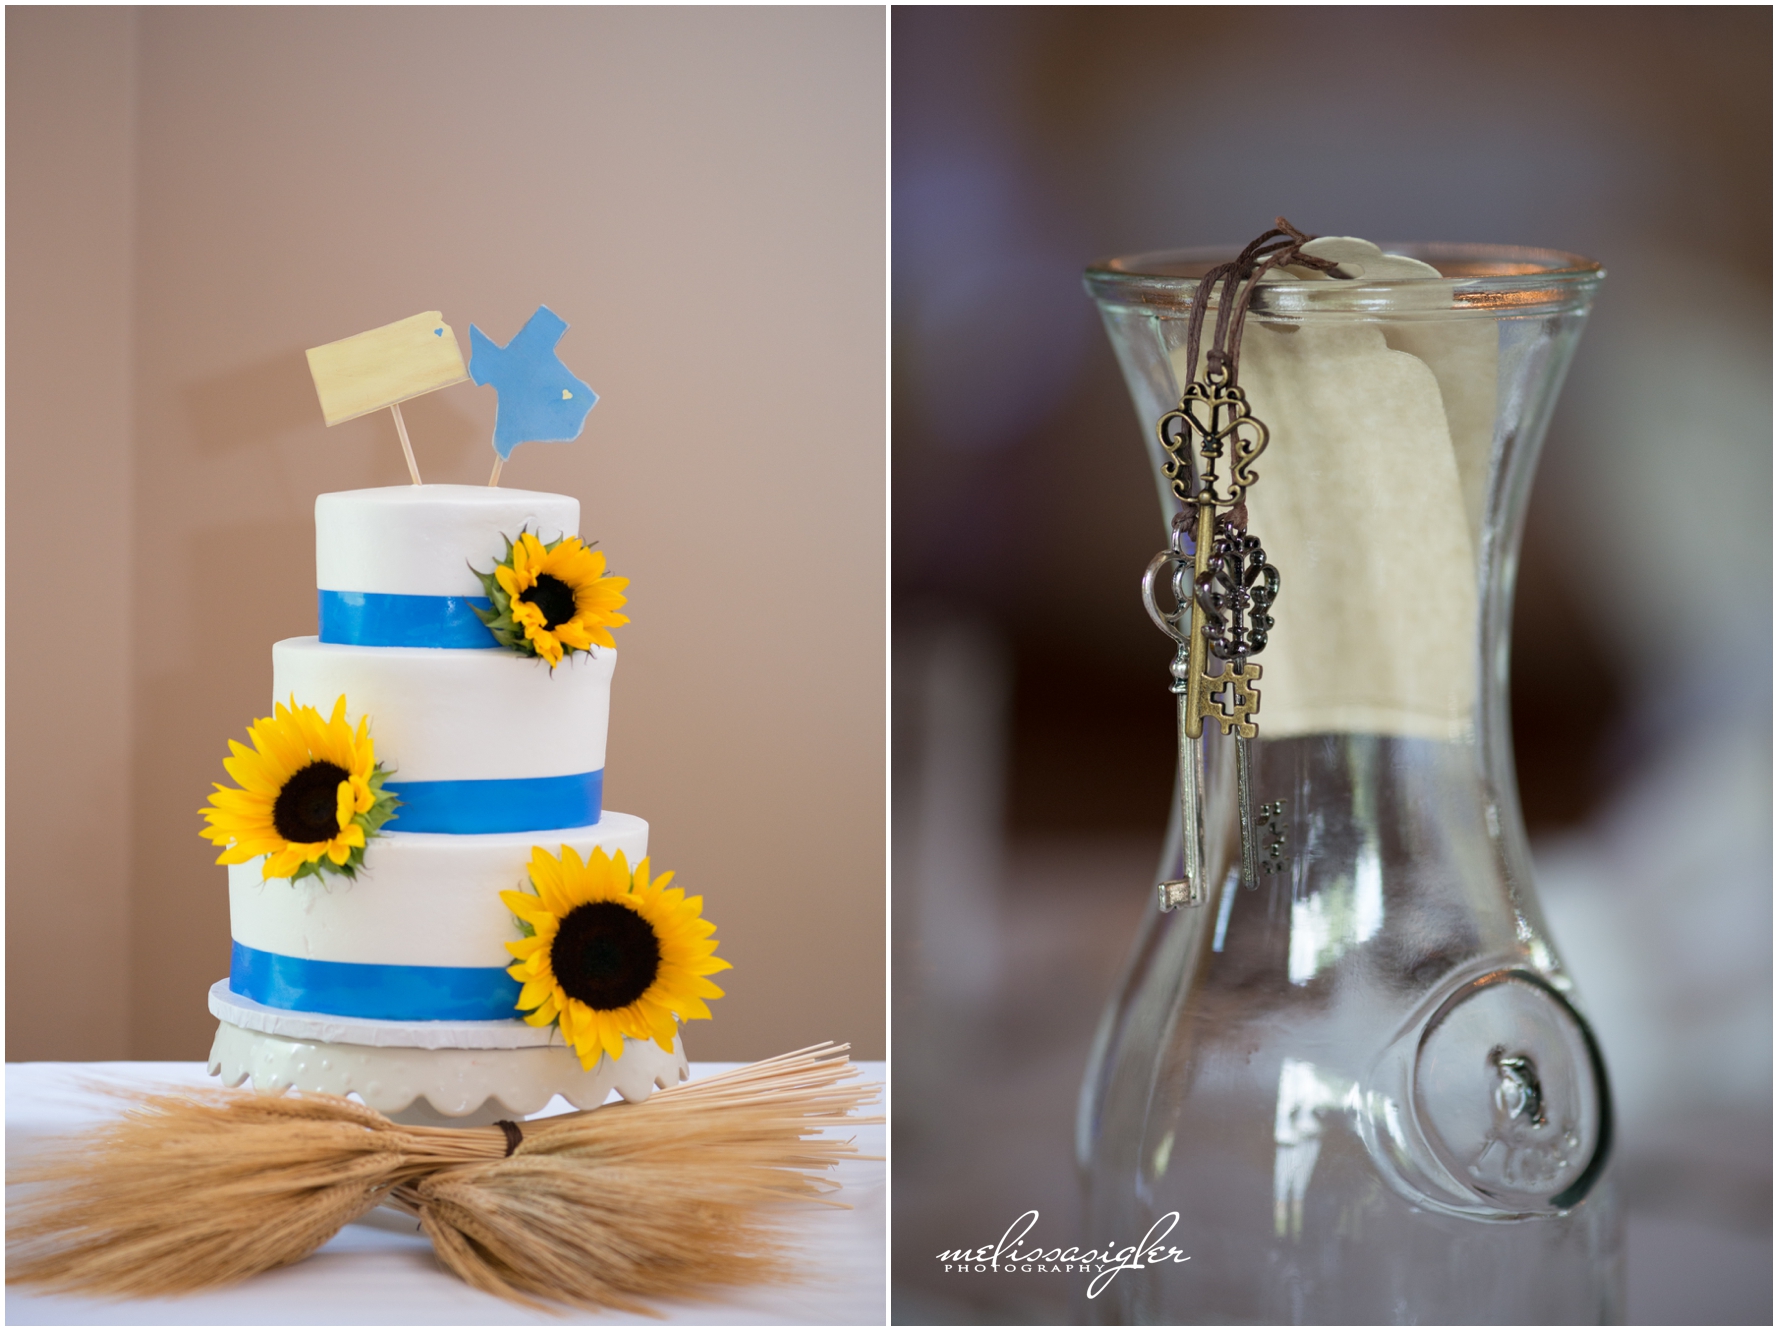 Wedding cake with sunflowers and wheat by Lawrence Kansas wedding photographer Melissa Sigler